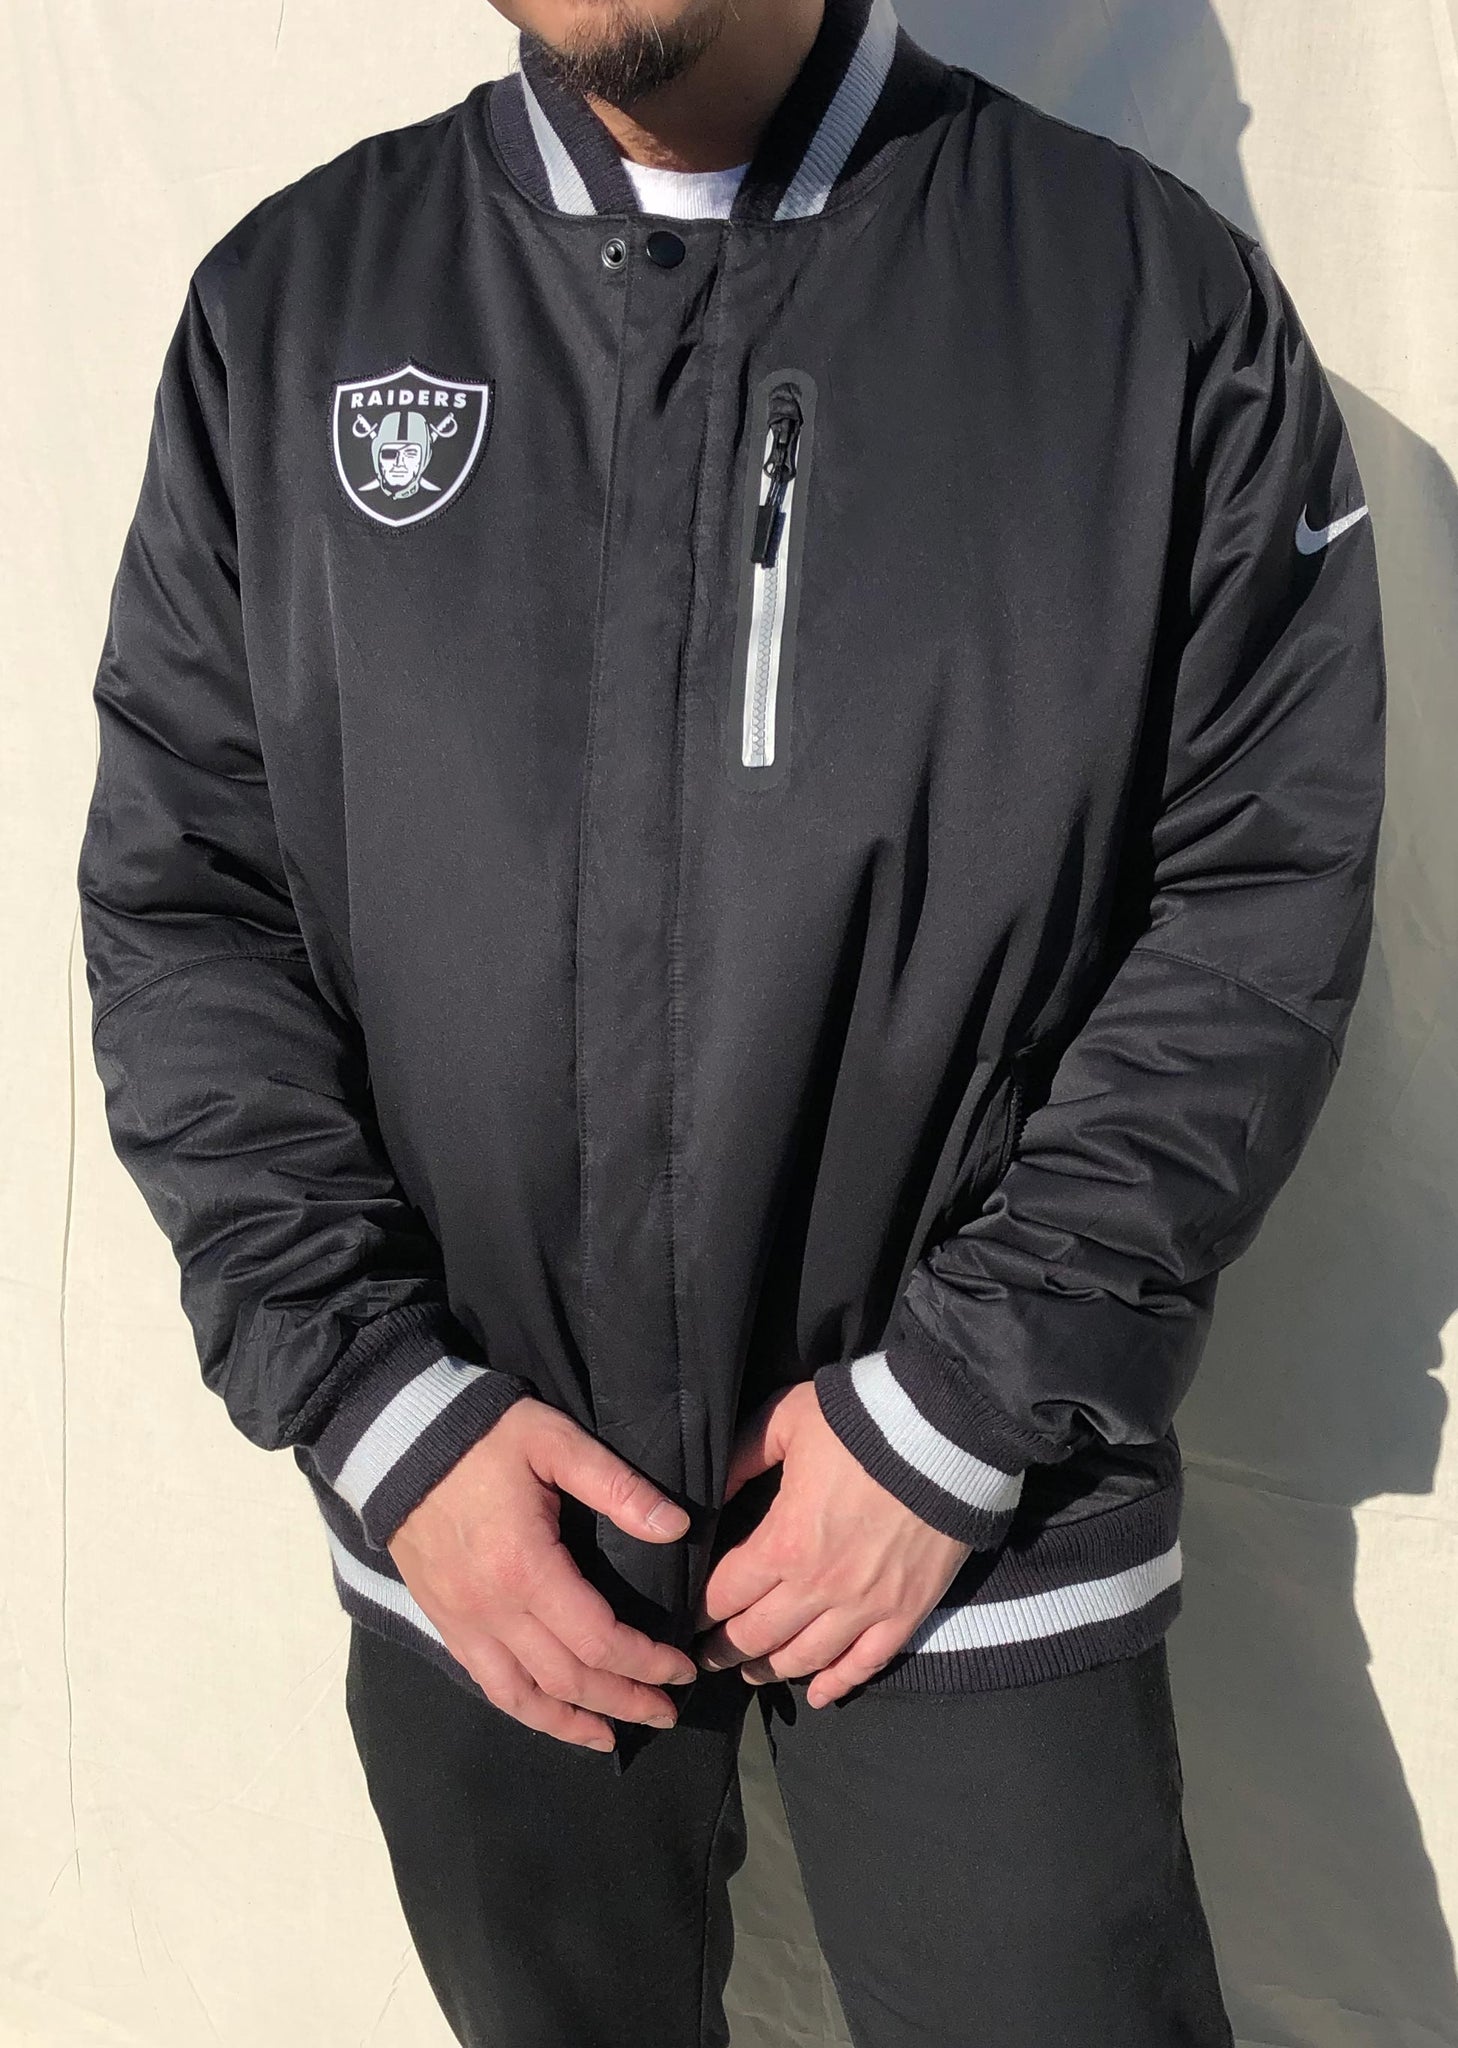 NFL Raiders x Nike Reversible Bomber Jacket Black/Silver (XL